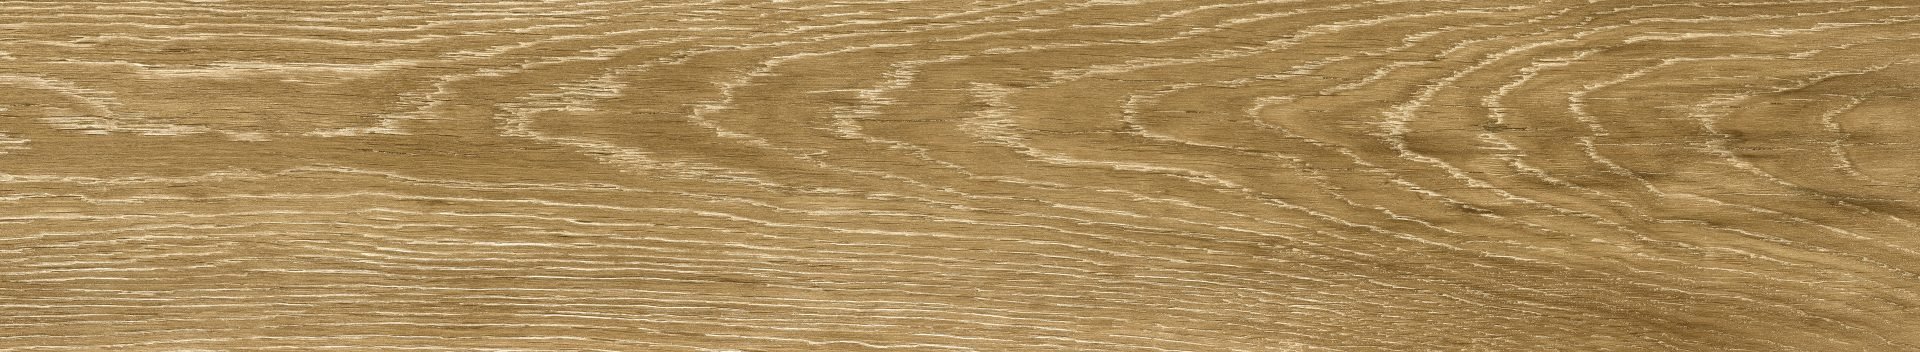 Tramonto sabbia - dlaždice 11x60 béžová 157493